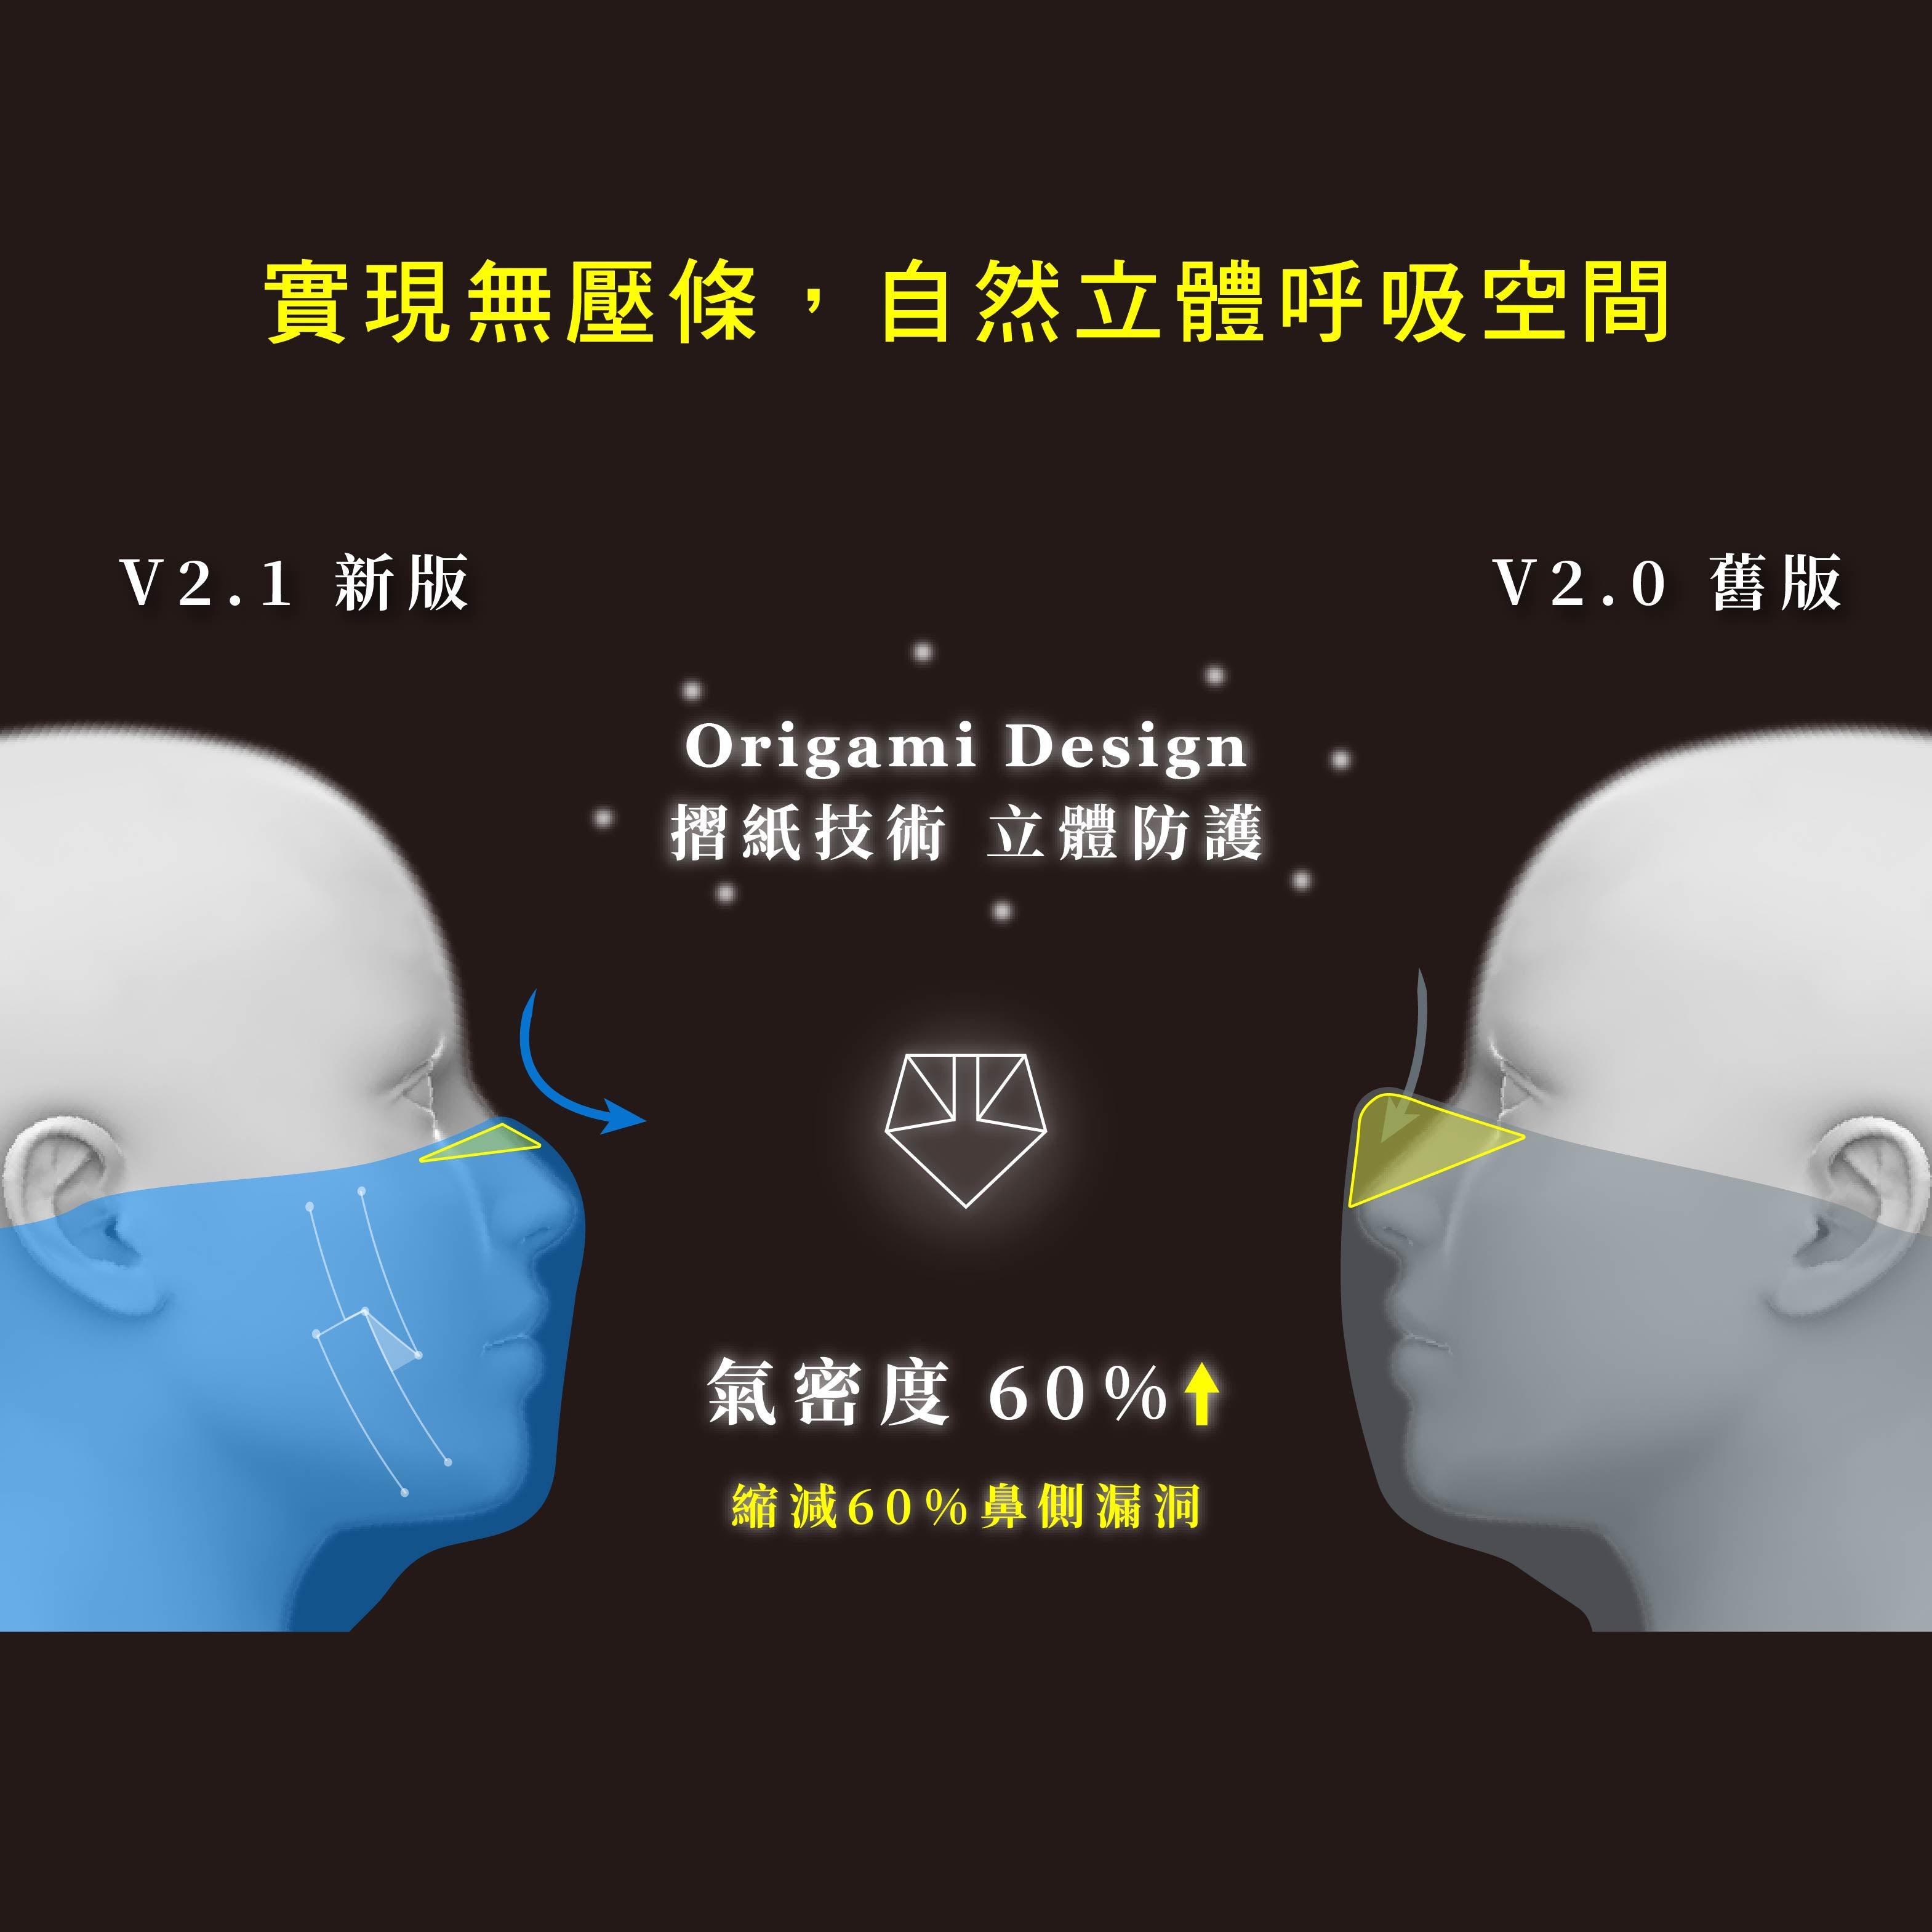 Anit-PM2.5 Headwear V2.0